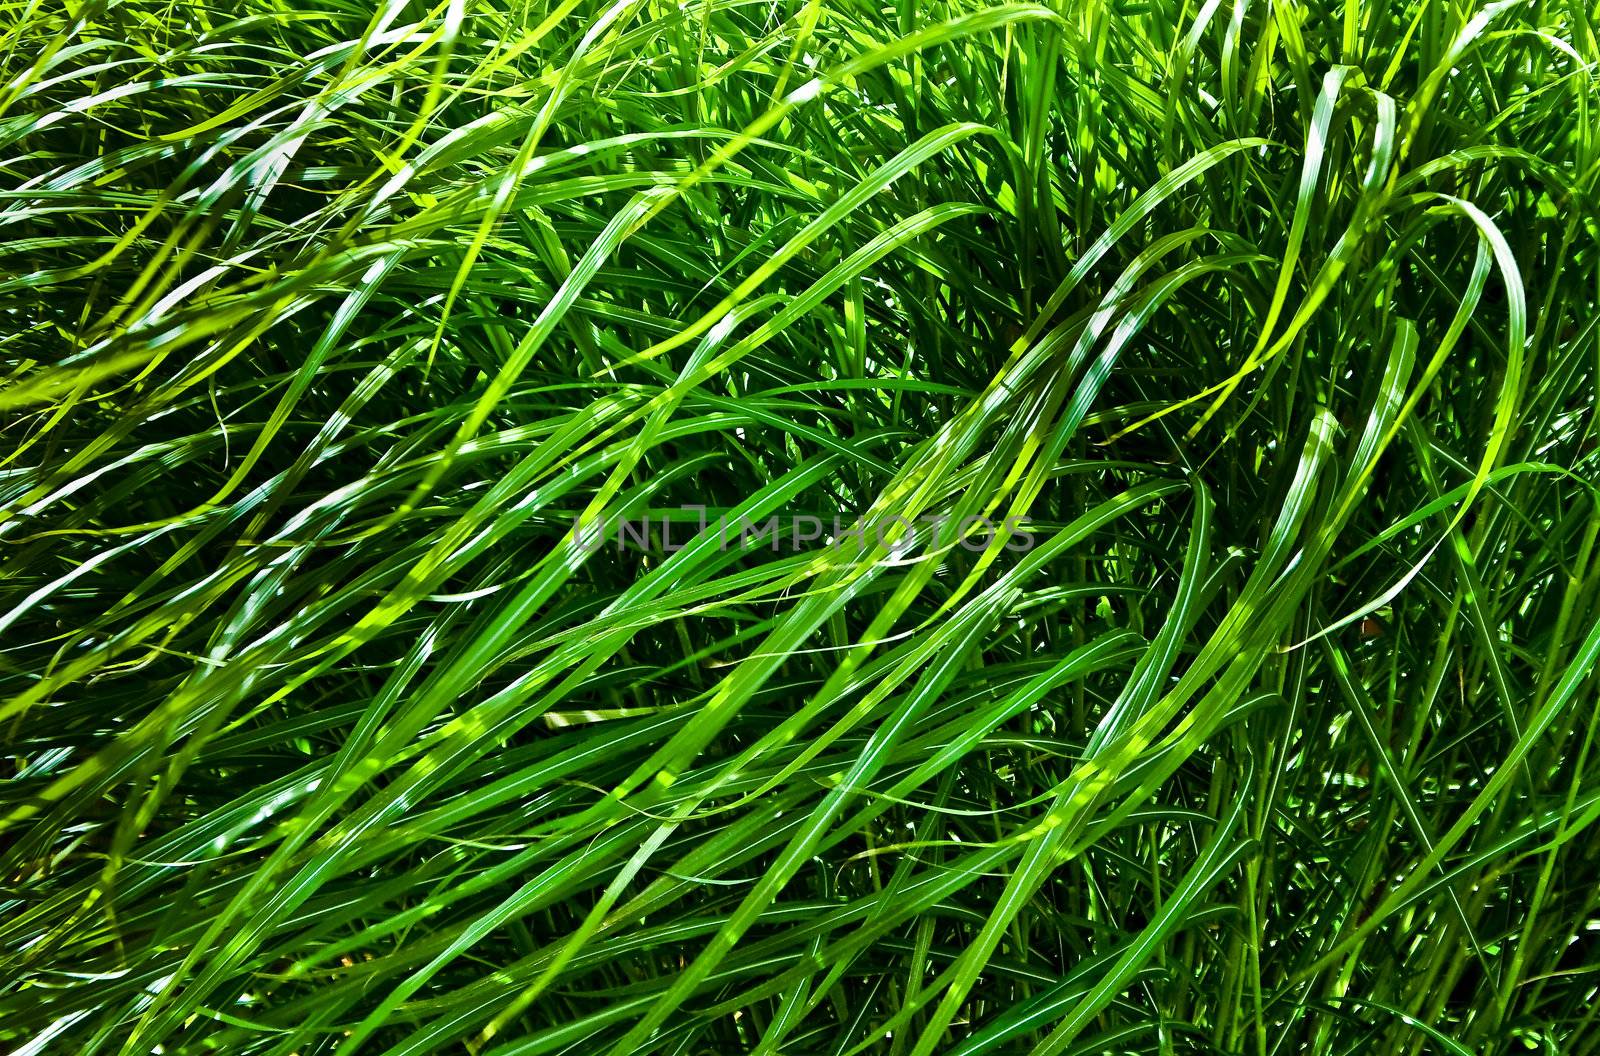 Windy Wild Grass by michelloiselle